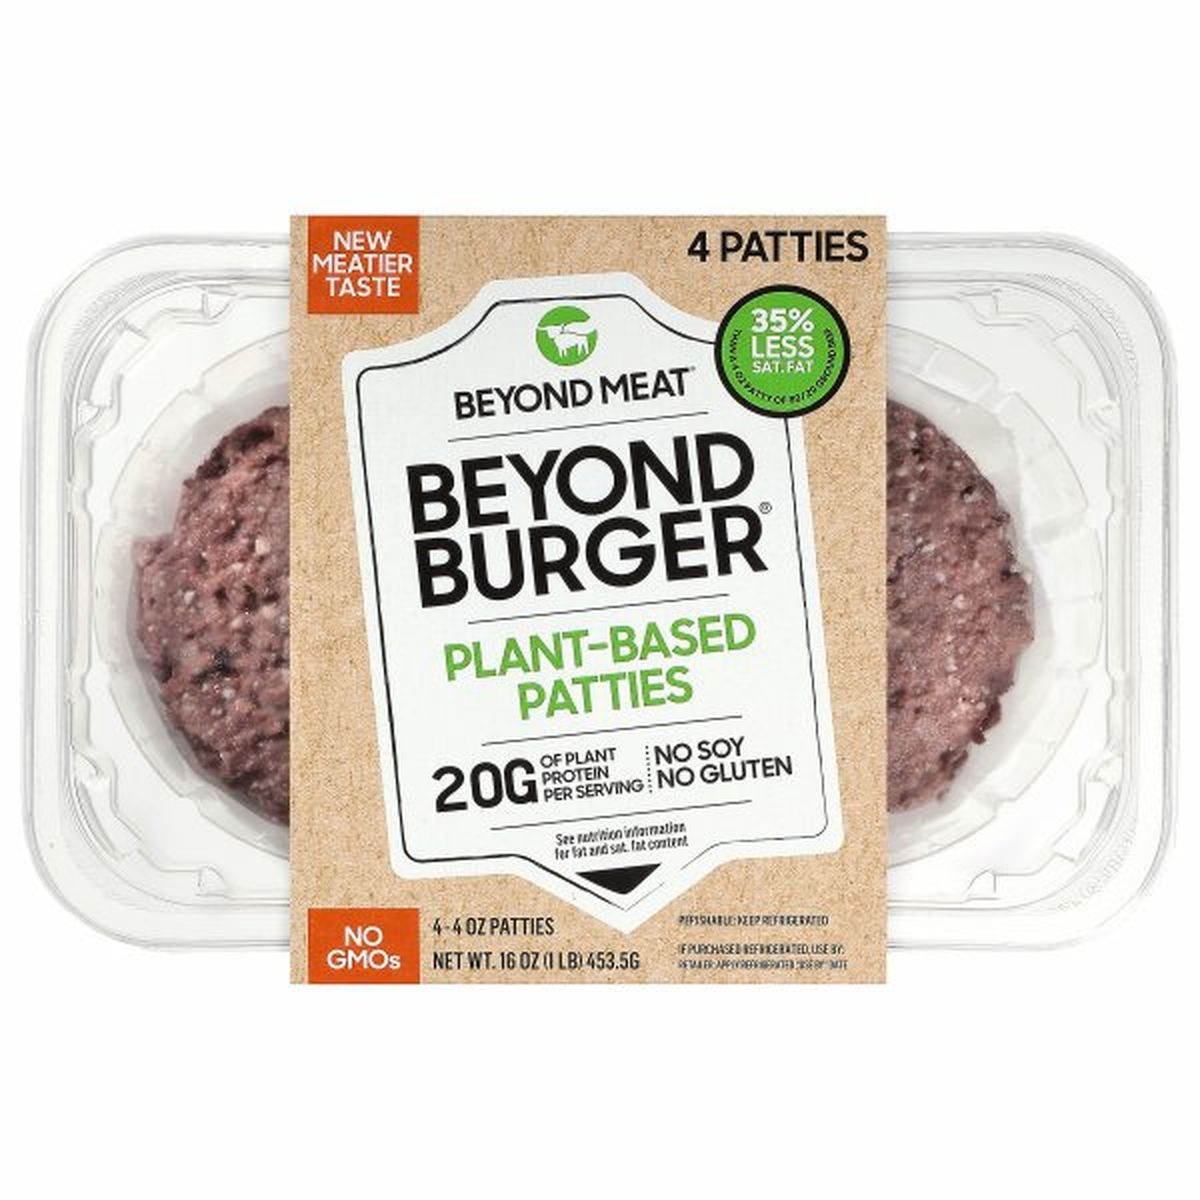 Calories in Beyond Meat Beyond Burger Patties, Plant-Based